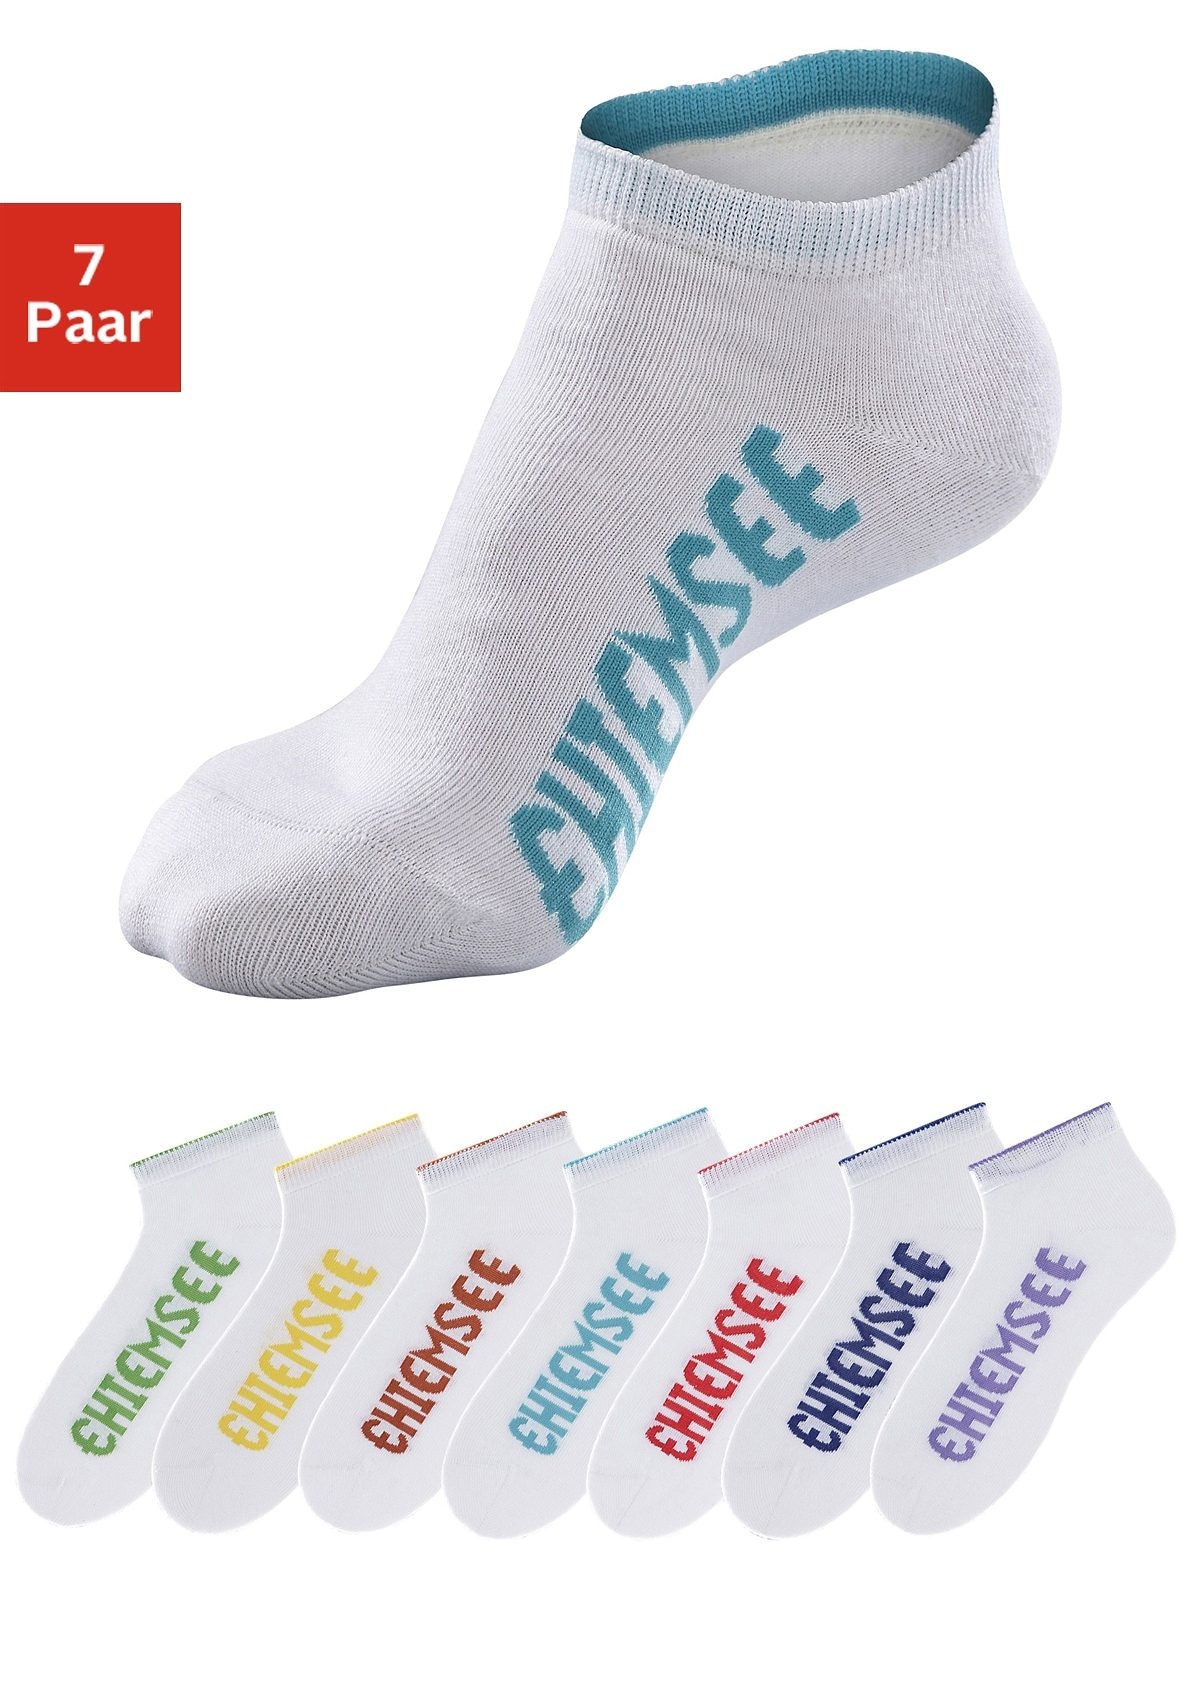 günstige - online Mode Socken shoppen